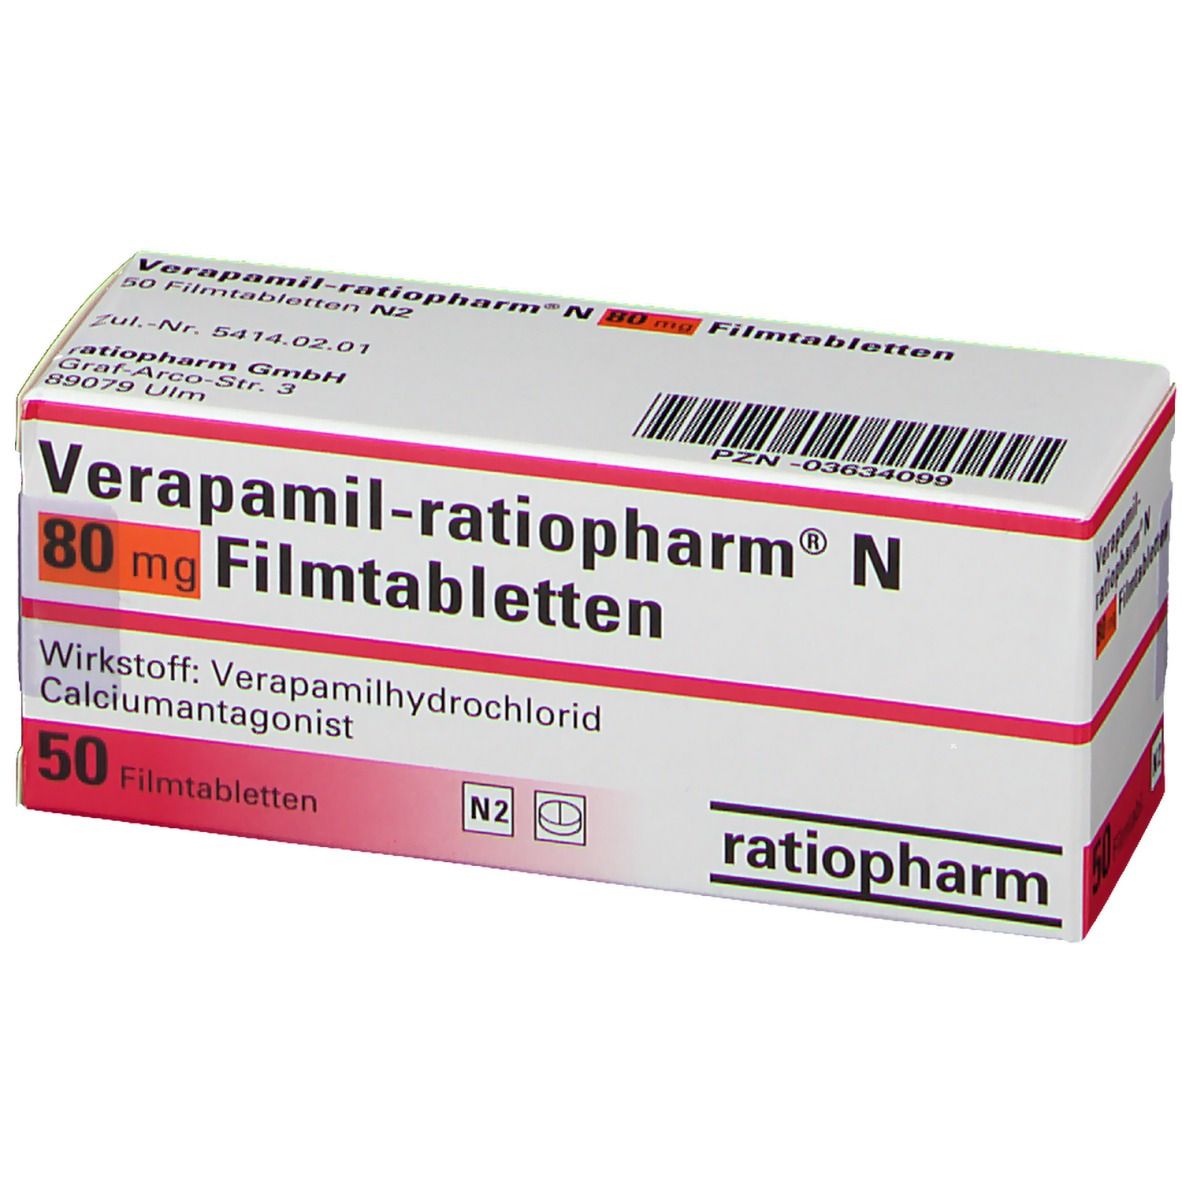 Verapamil-ratiopharm® N 80 mg